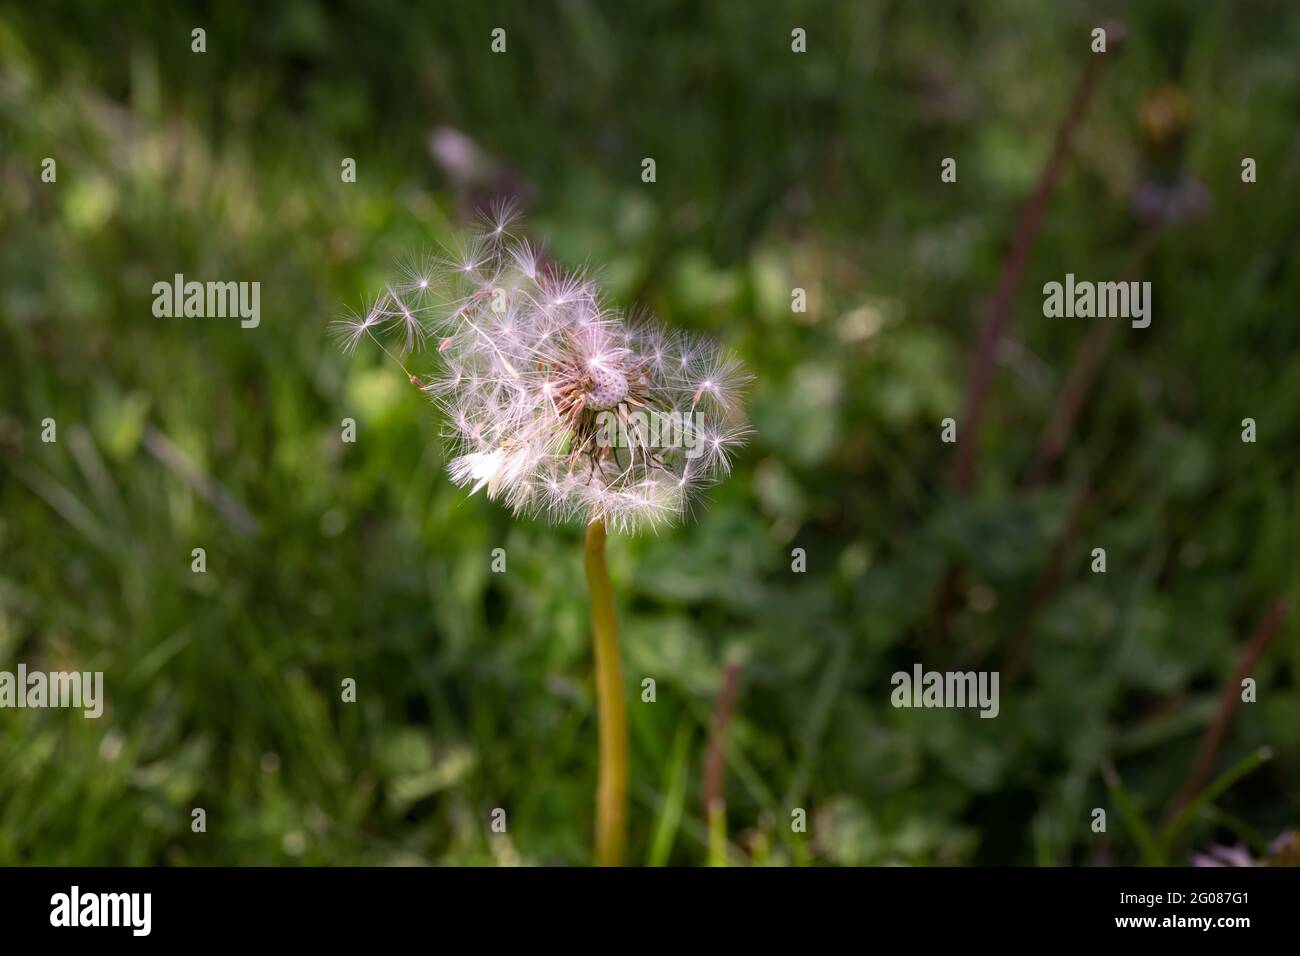 Macro photography of the seedhead of a dandelion Stock Photo